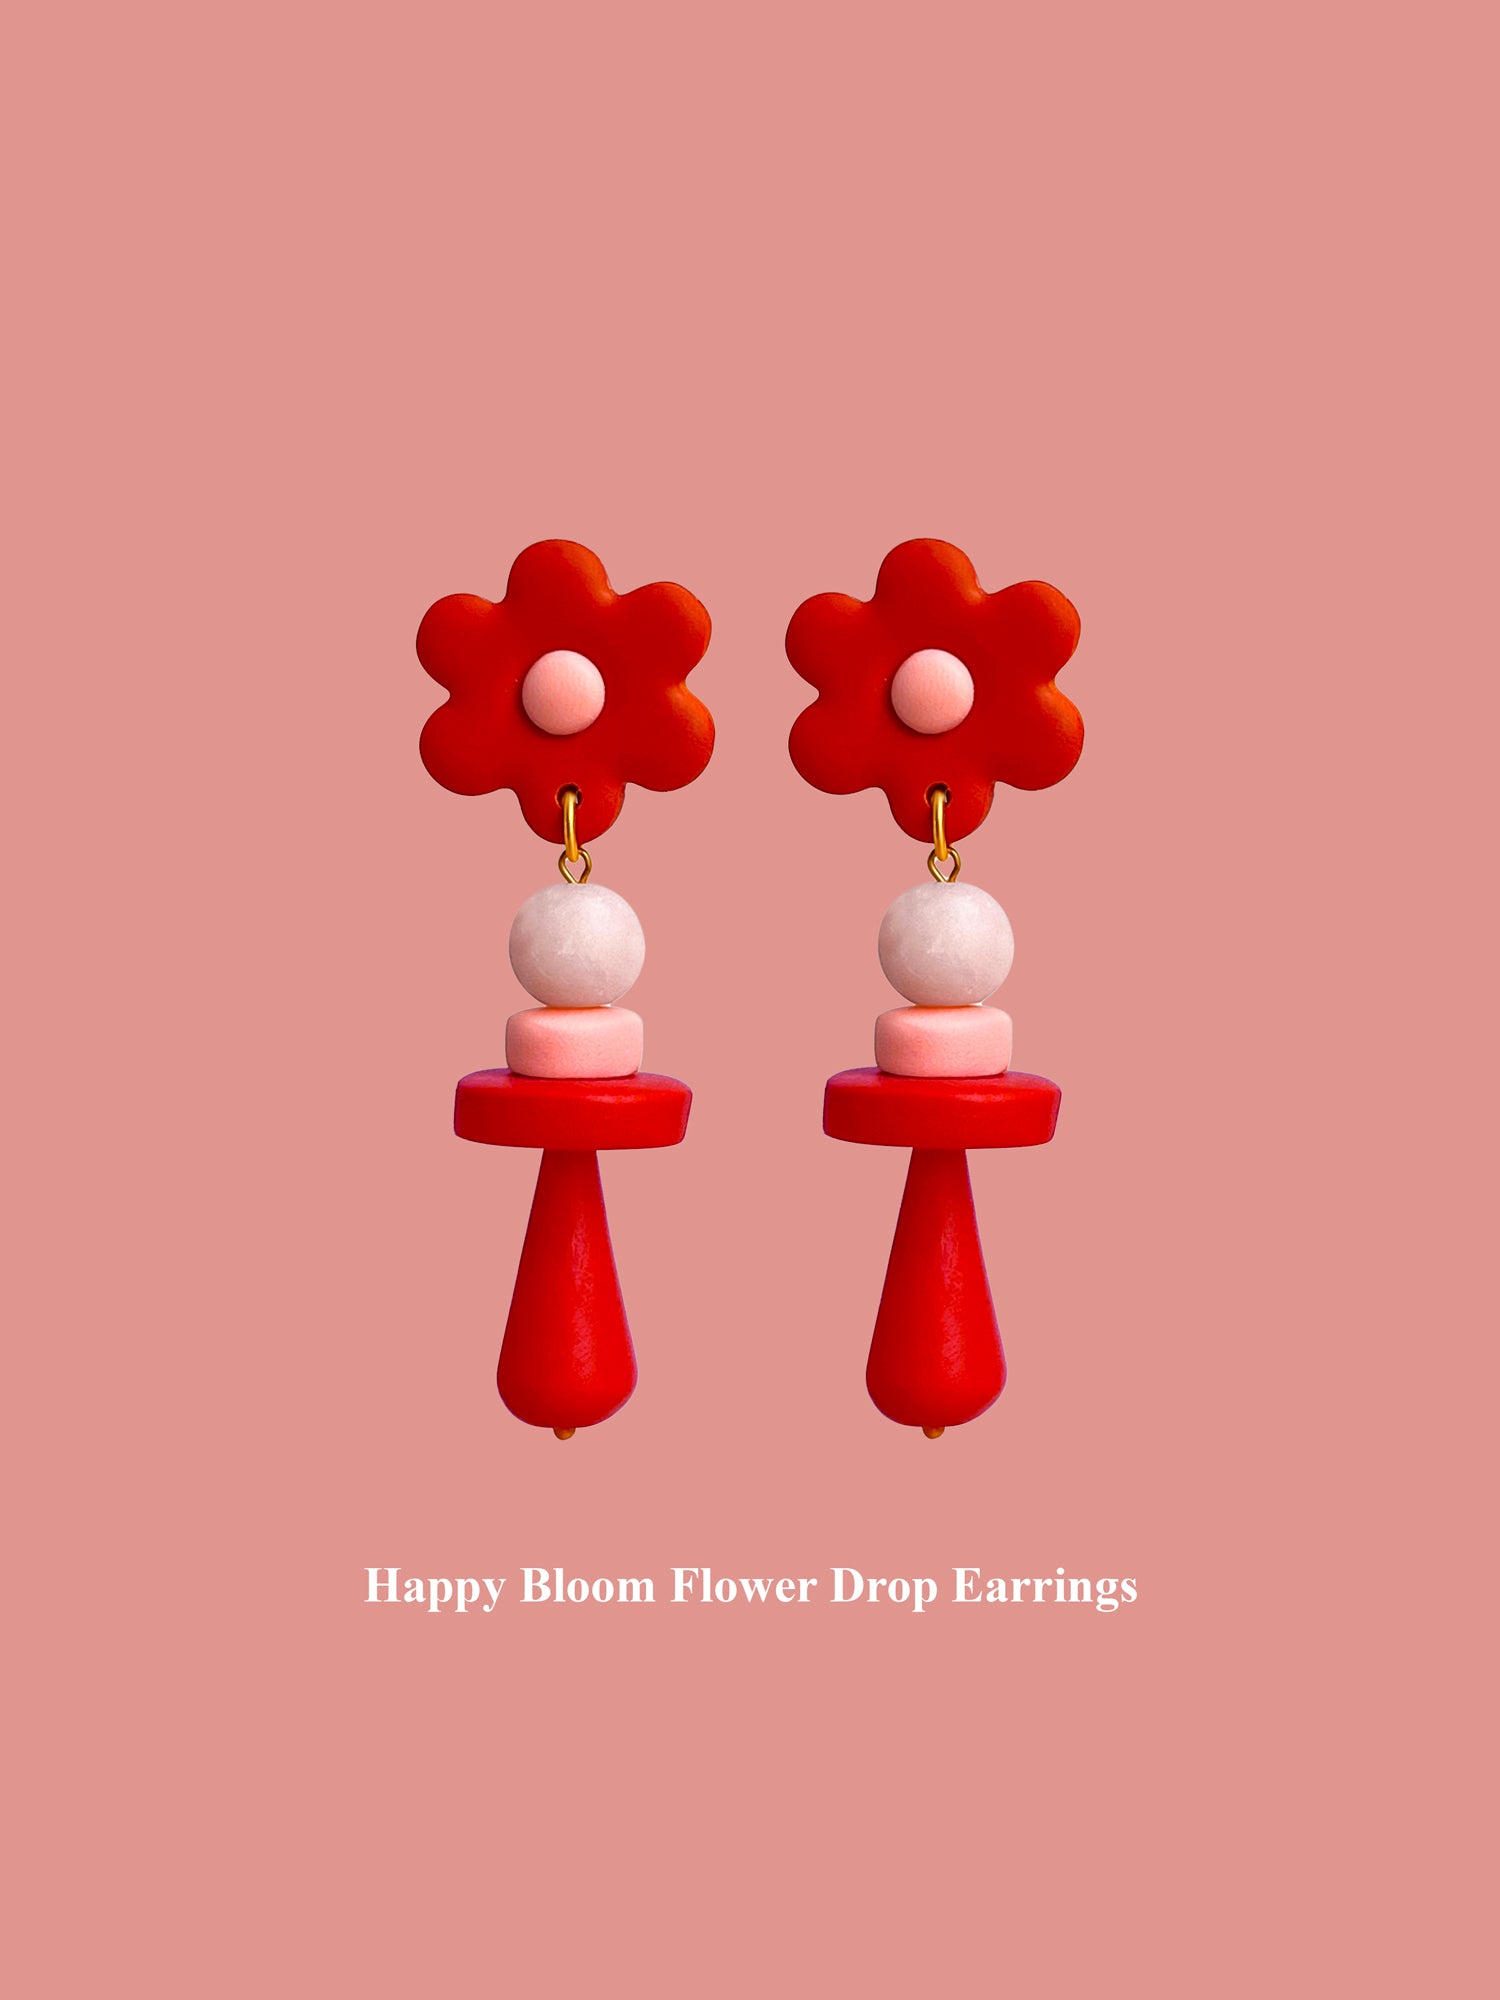 Happy Bloom Flower Drop Earrings   Fortune Red text